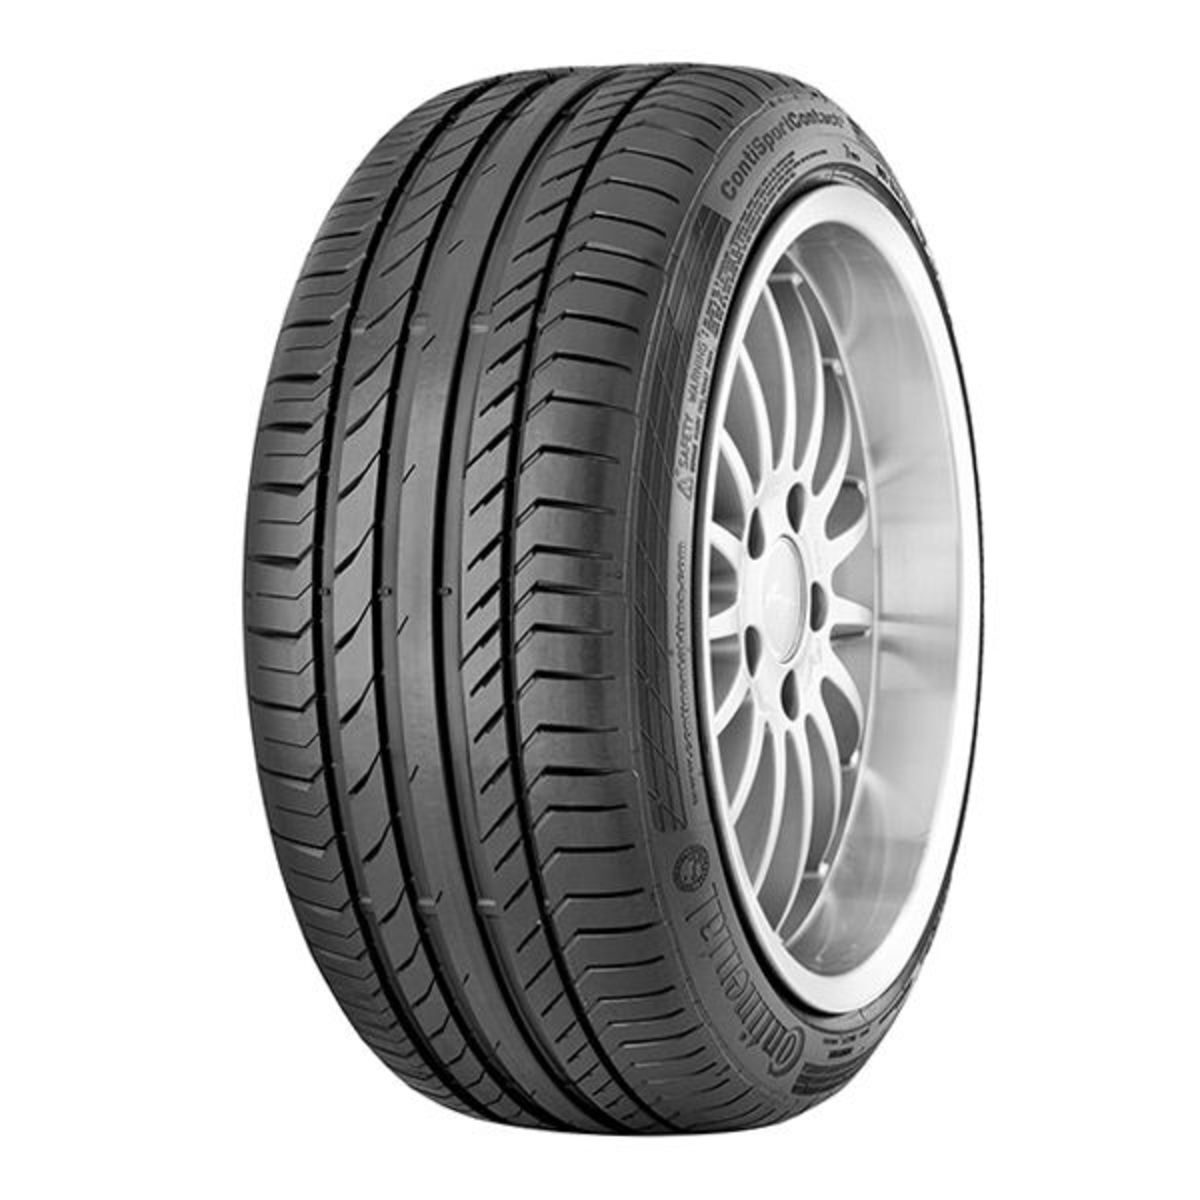 Neumáticos de verano CONTINENTAL ContiSportContact 5 255/45R18 XL 103H